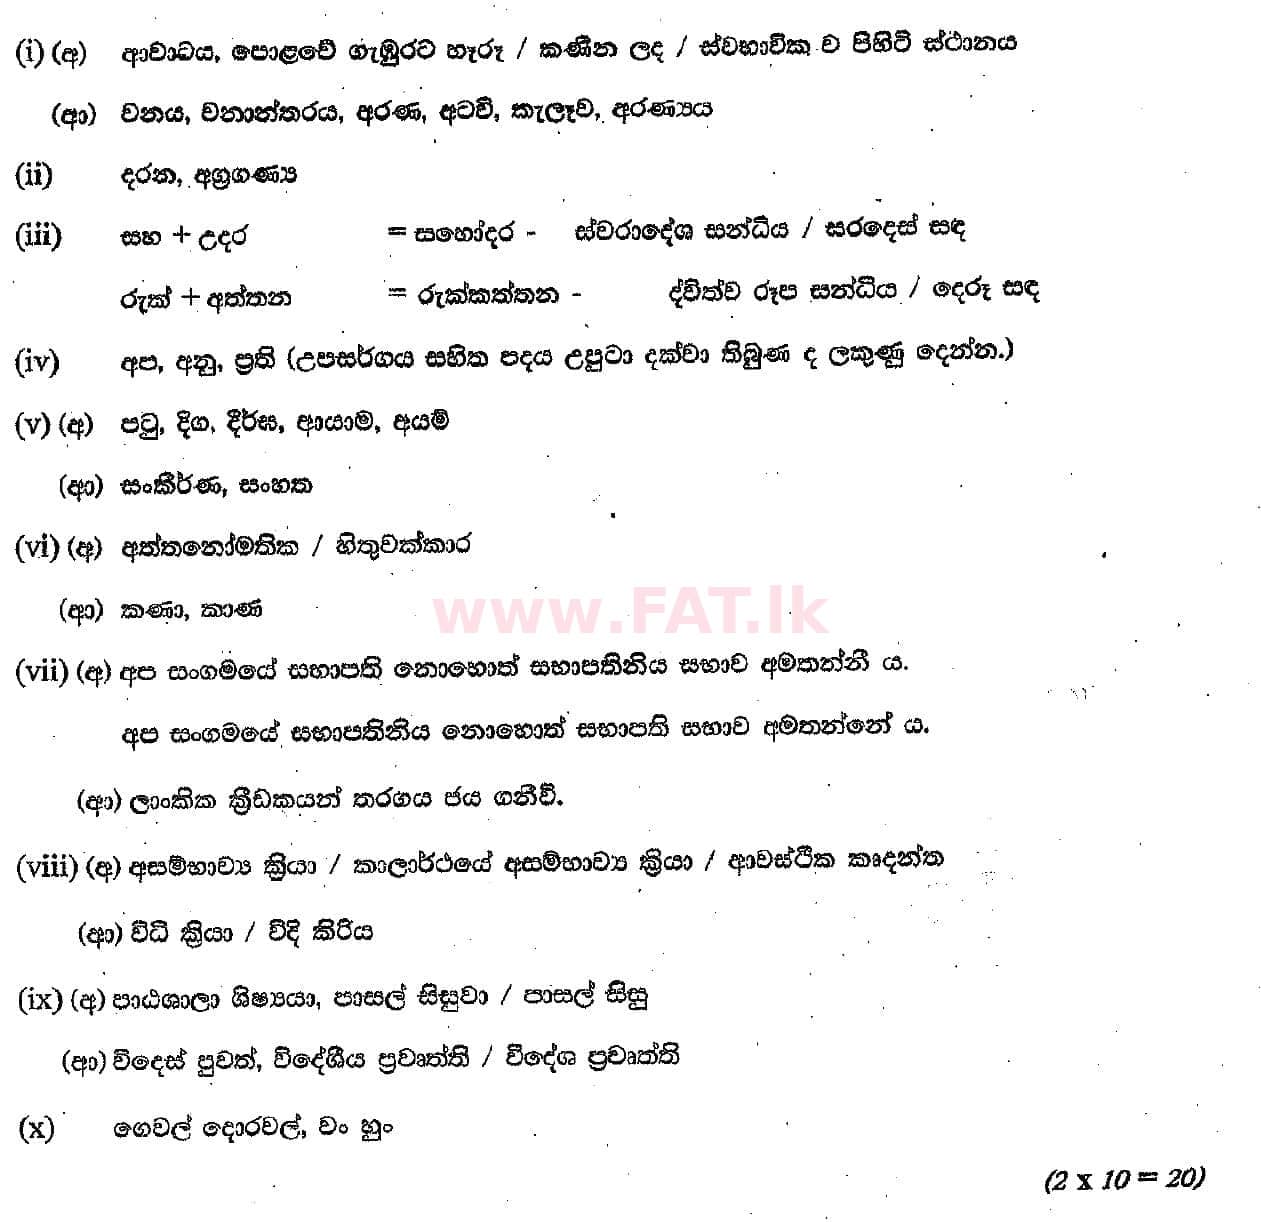 National Syllabus : Ordinary Level (O/L) Sinhala Language and Literature - 2018 December - Paper II (සිංහල Medium) 1 5470